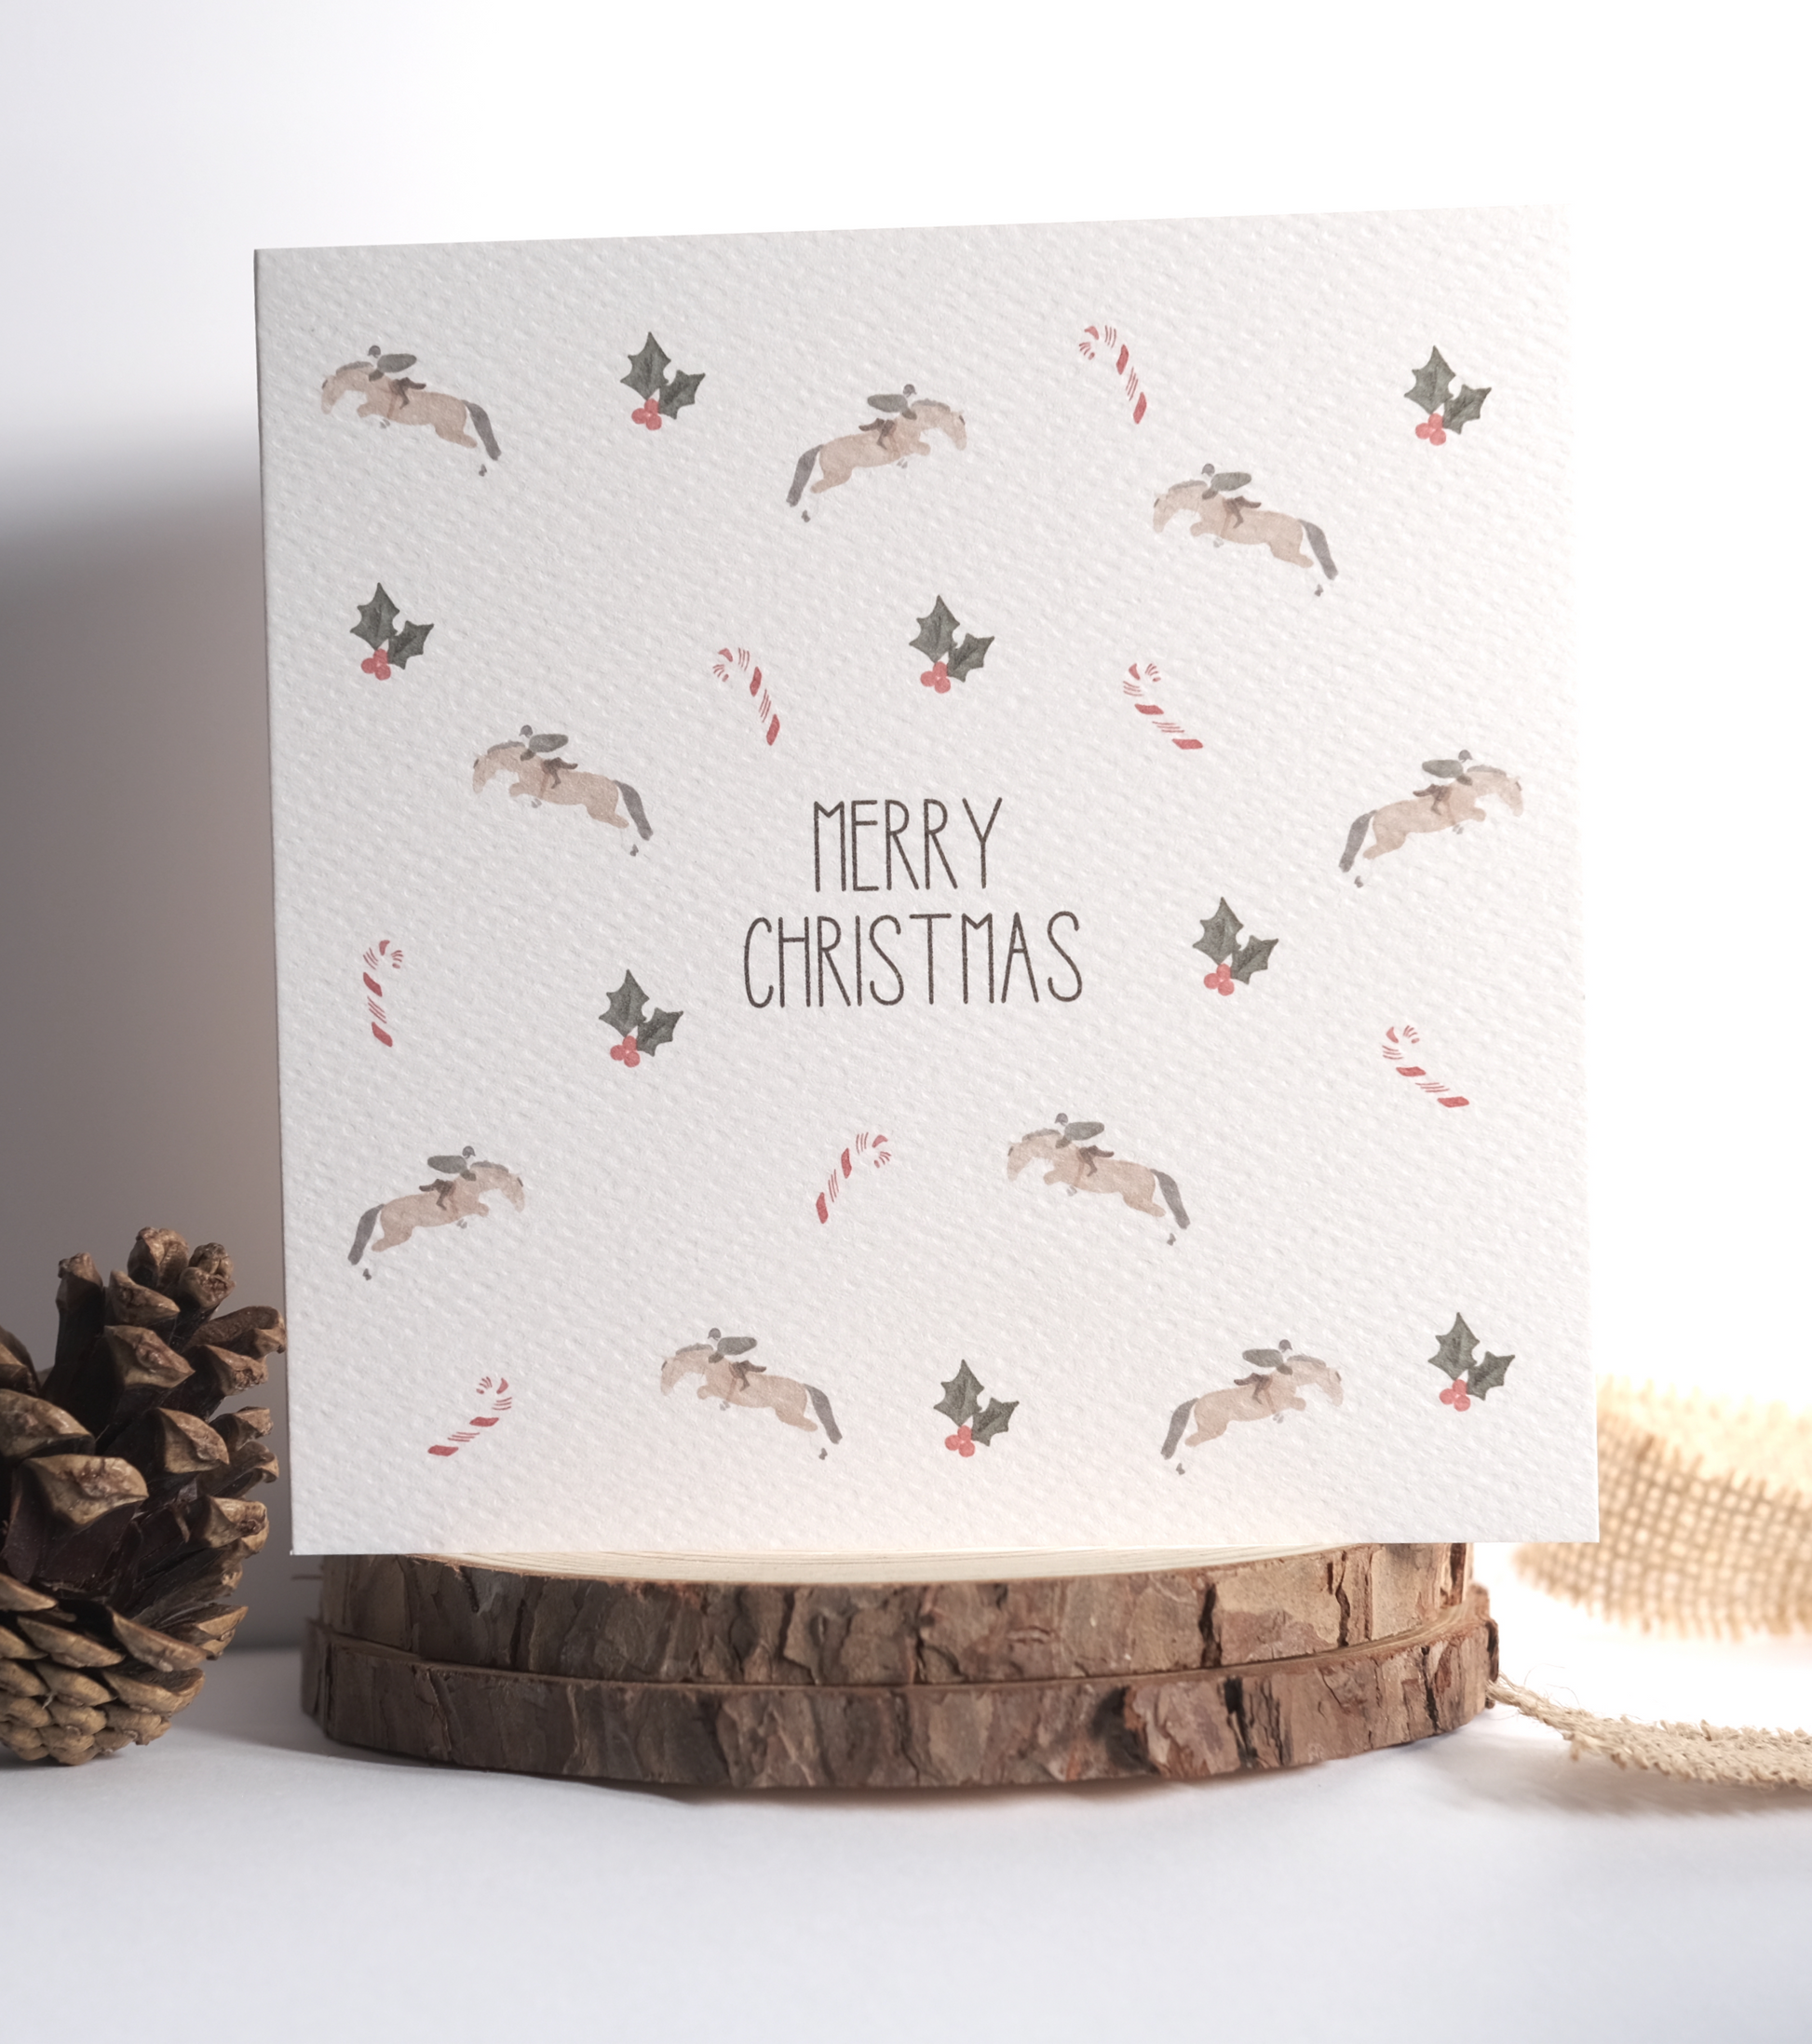 Merry Christmas Jumping Christmas Card - Glas Equine